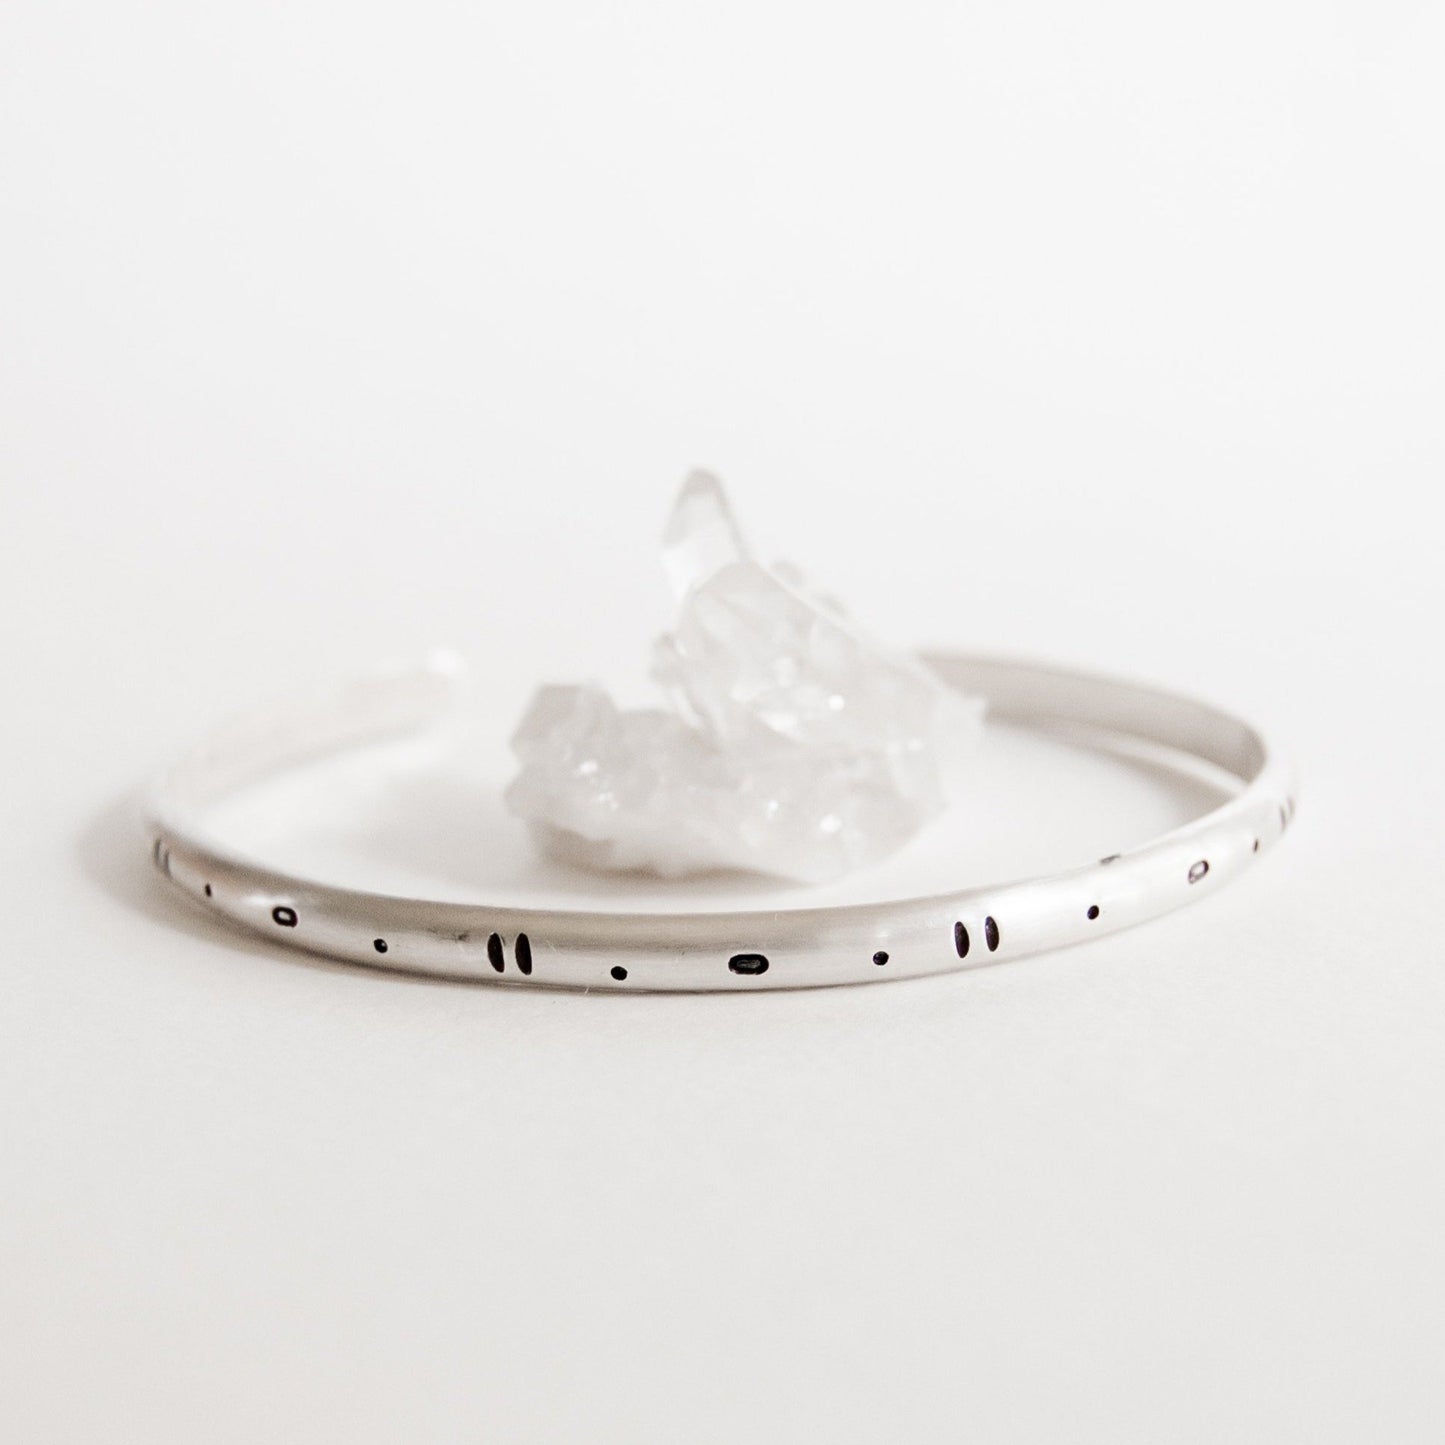 Silver Geo Stamped Cuff Bracelet - Third Hand Silversmith handmade jewelry, Bozeman, Montana